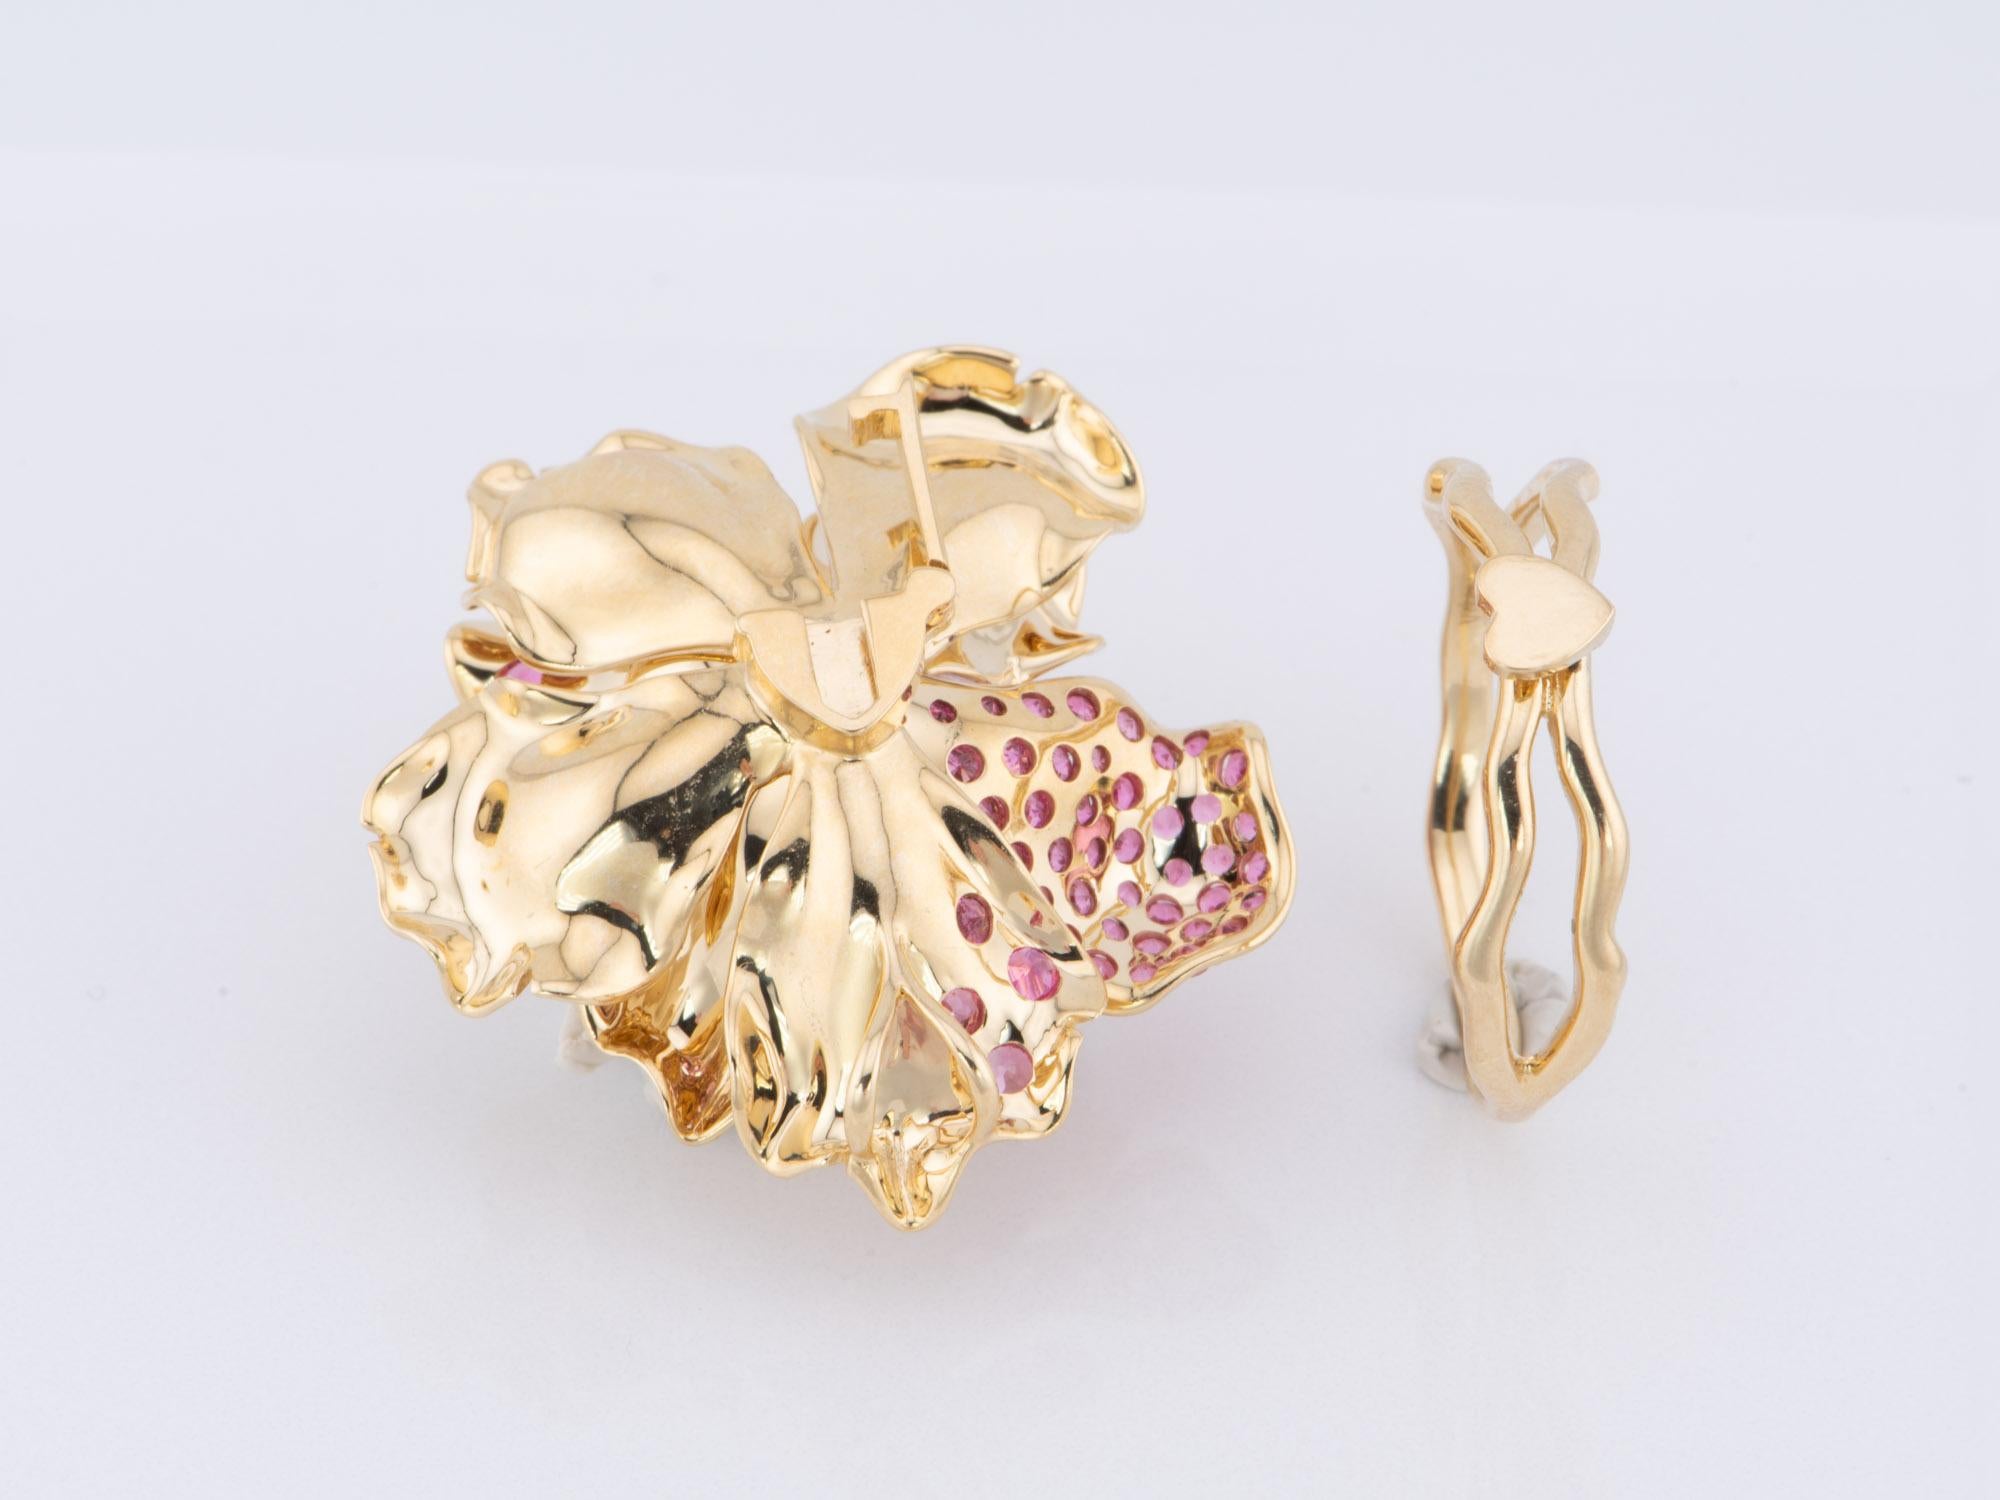 Art Jewelry Rubellite Tourmaline Center Flower Ring / Pendant 18K Gold R6641 For Sale 10